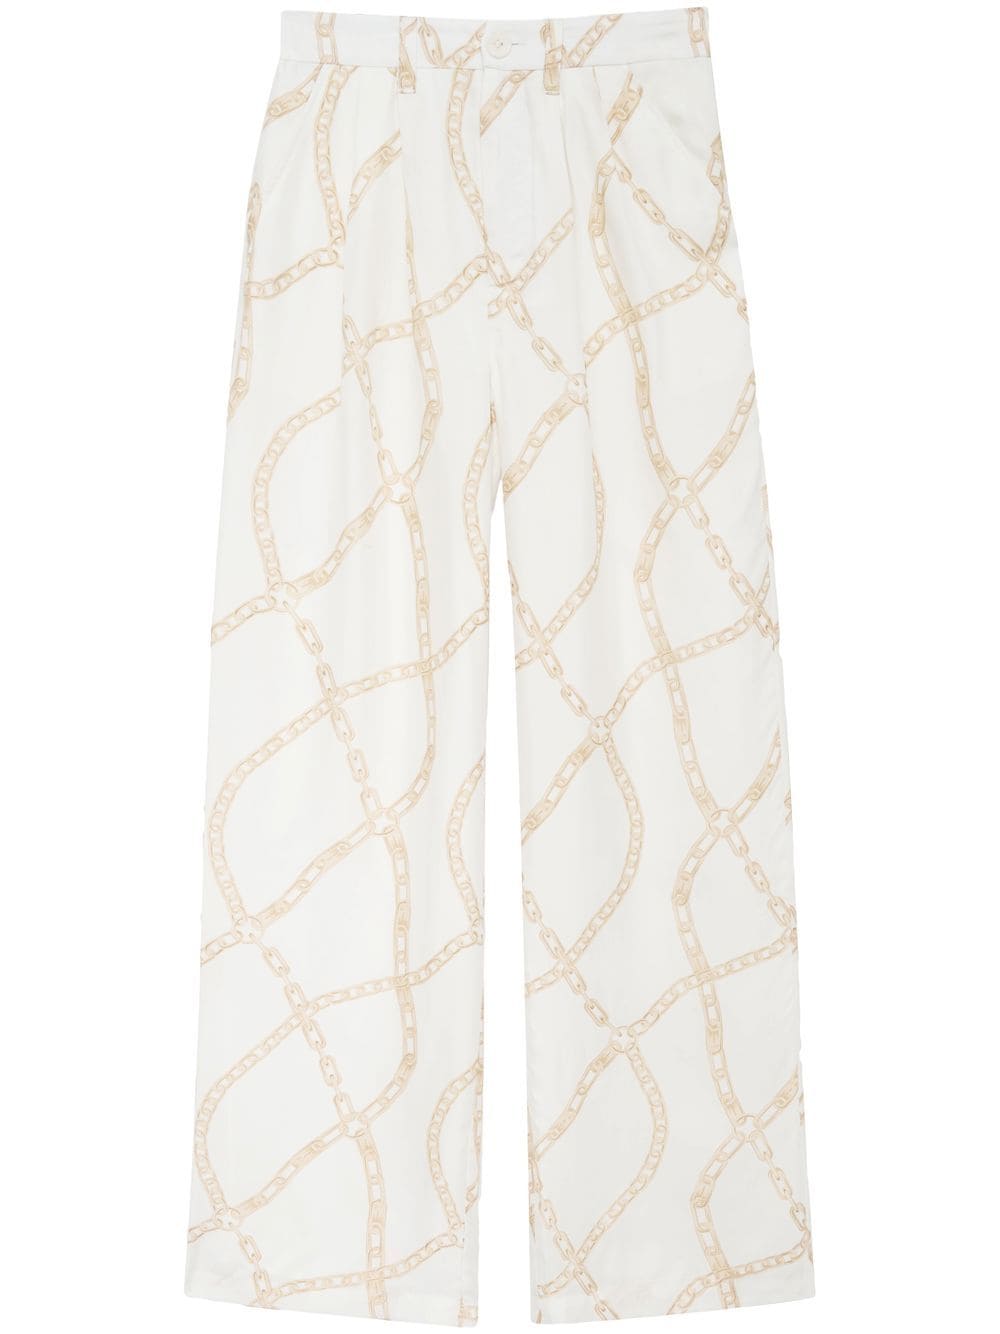 ANINE BING chain link-print trousers - White